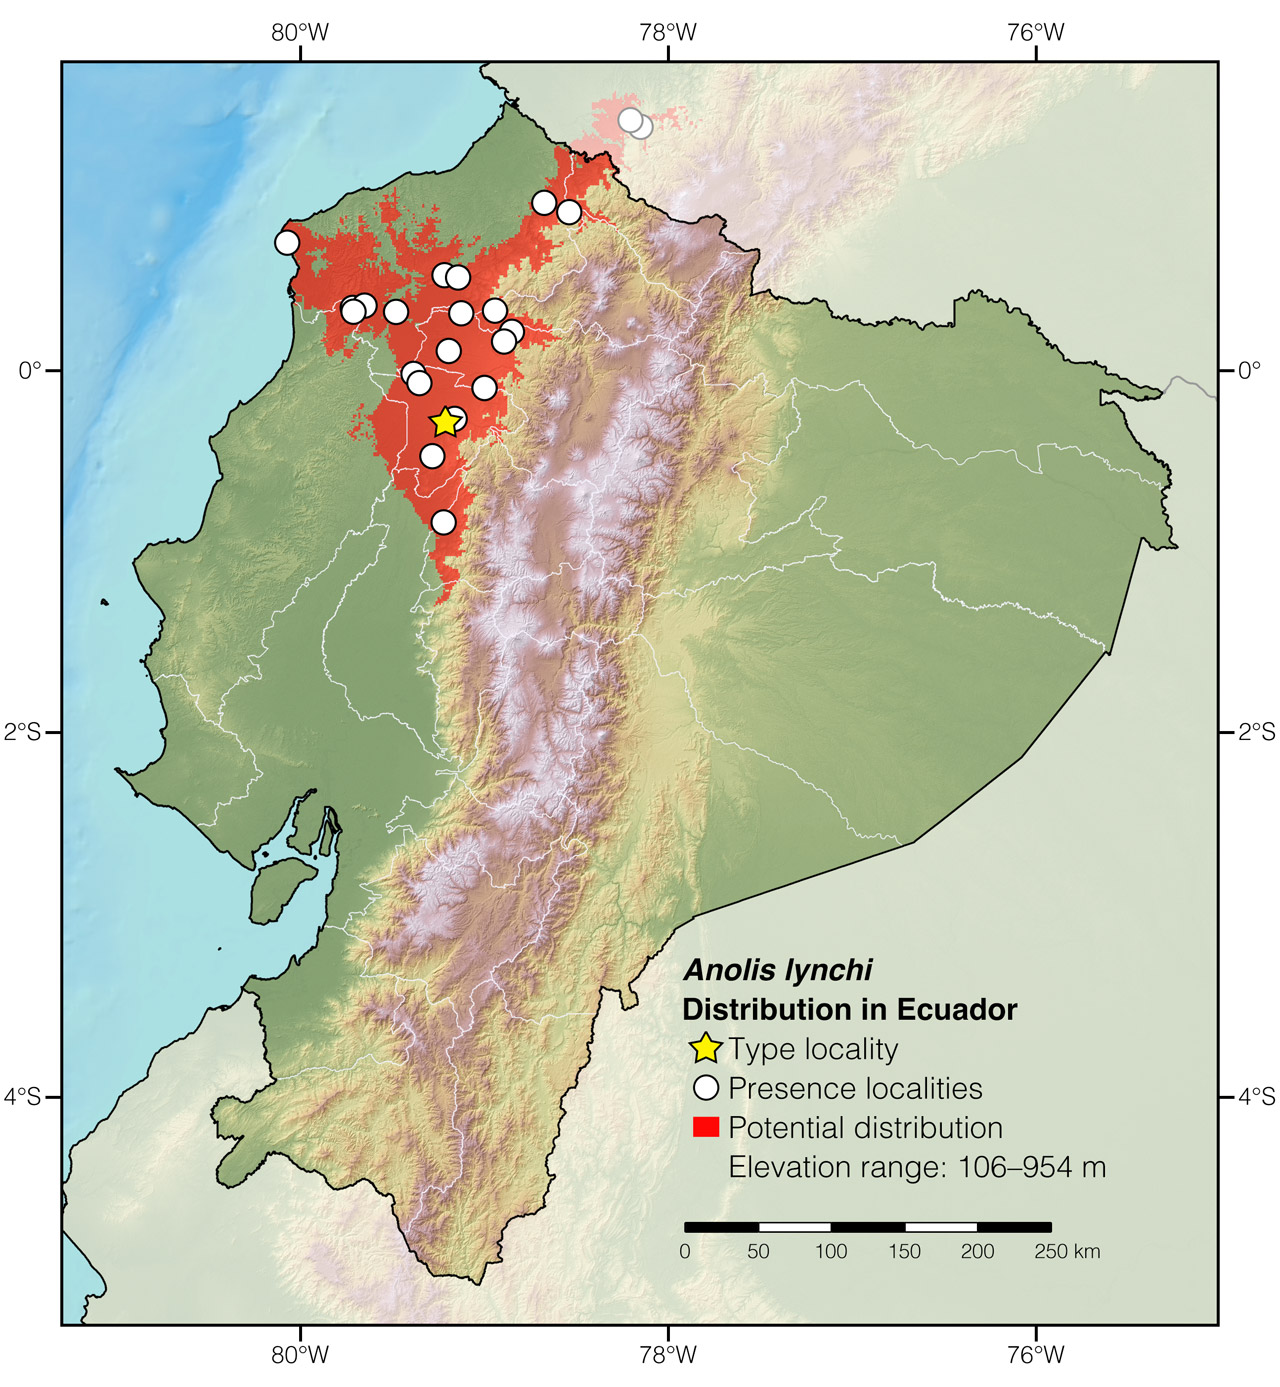 Distribution of Anolis lynchi in Ecuador